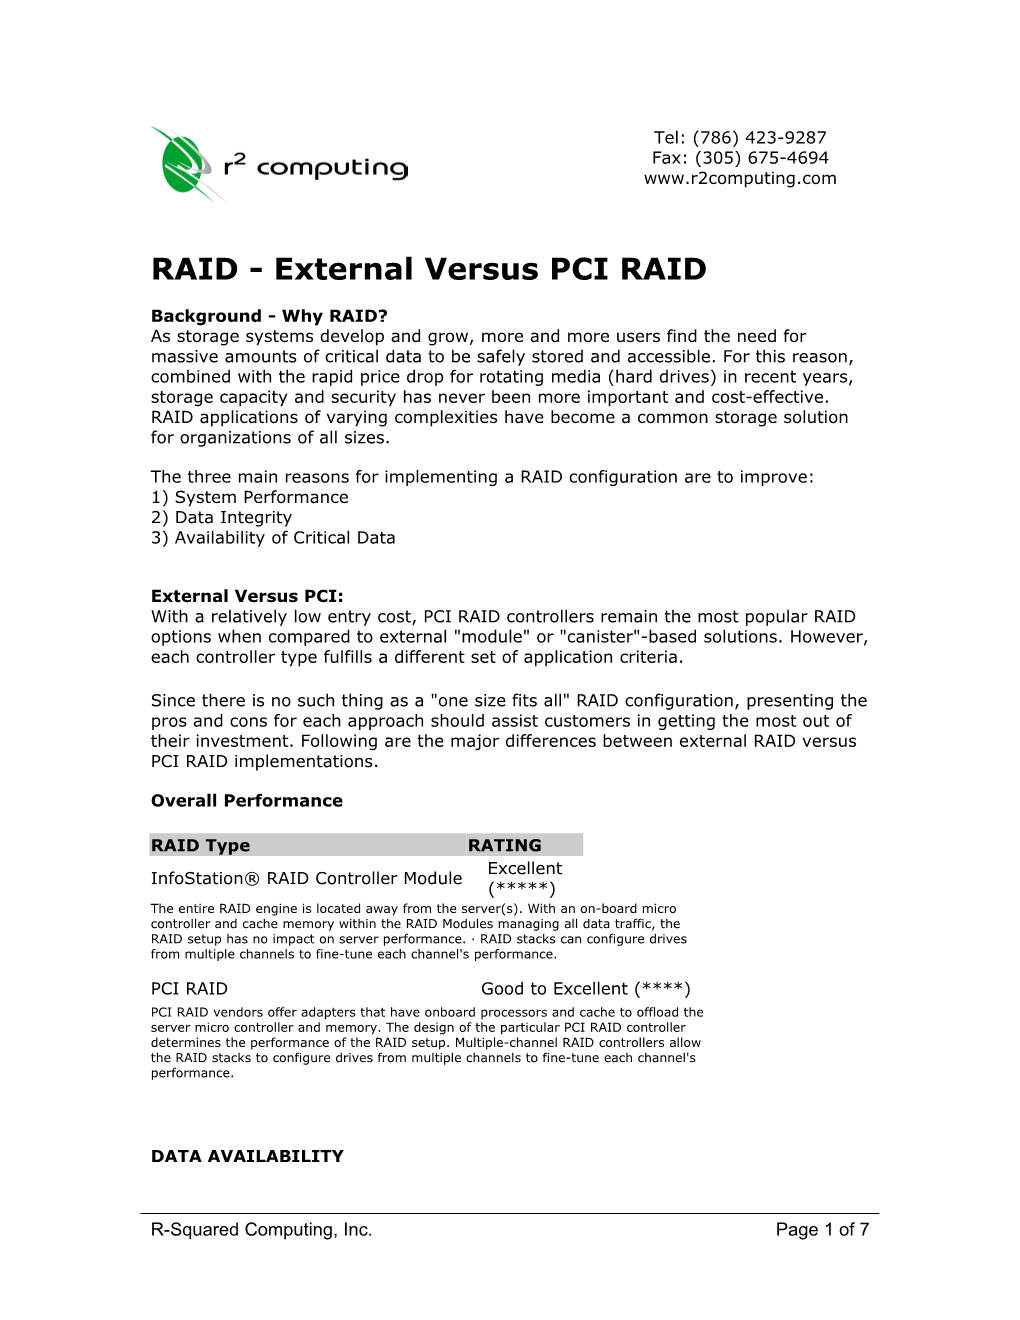 RAID - External Versus PCI RAID